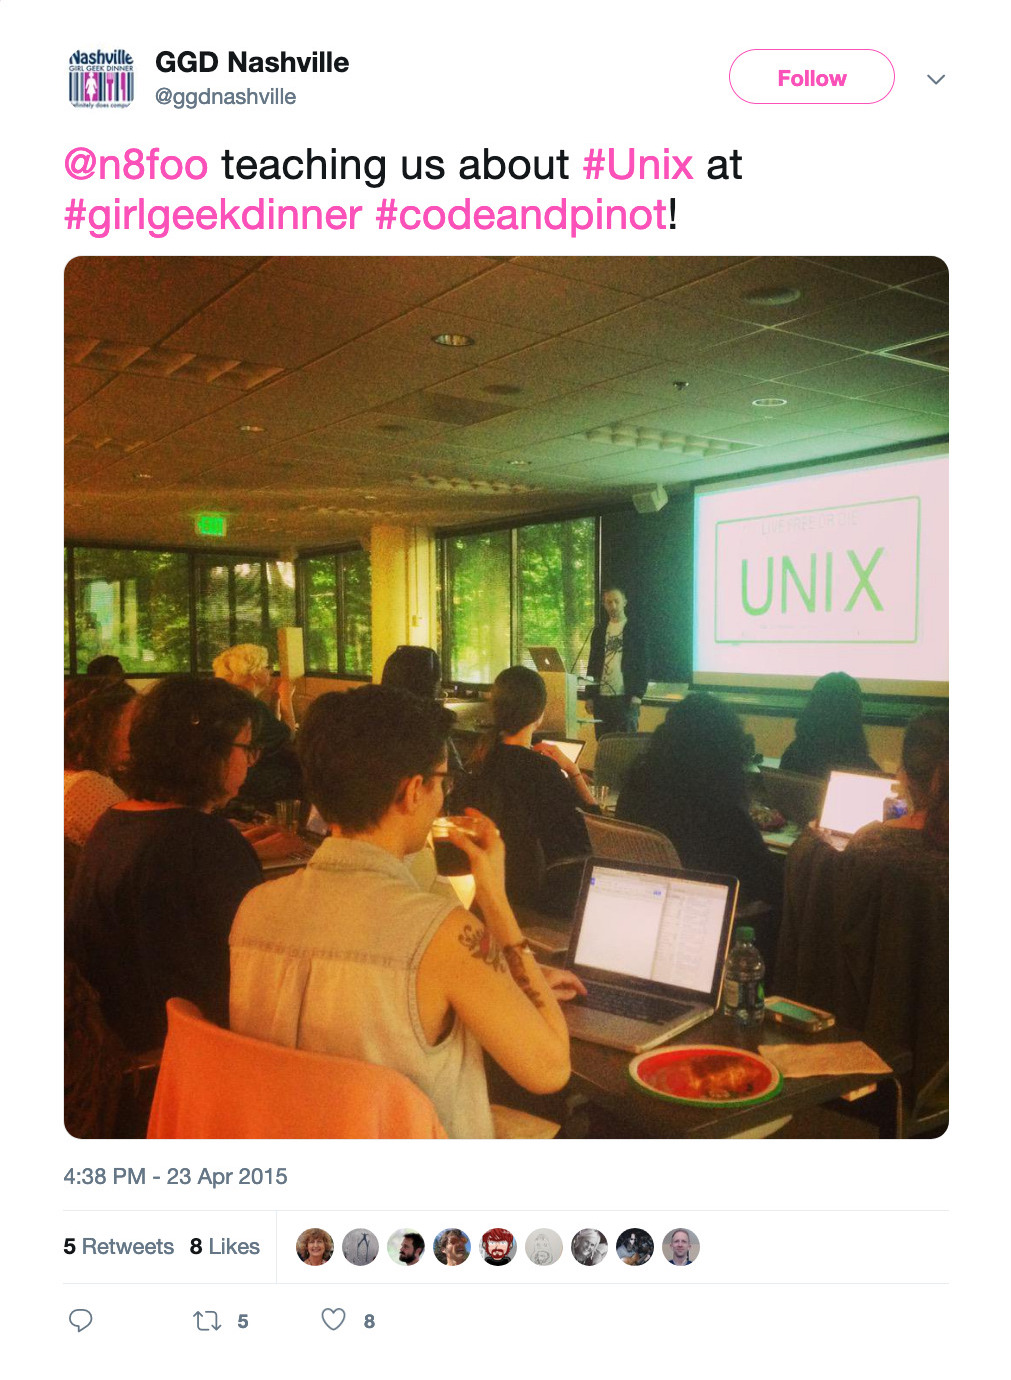 @n8foo teaching us about #Unix at #geekgirldinner #codeandpinot!